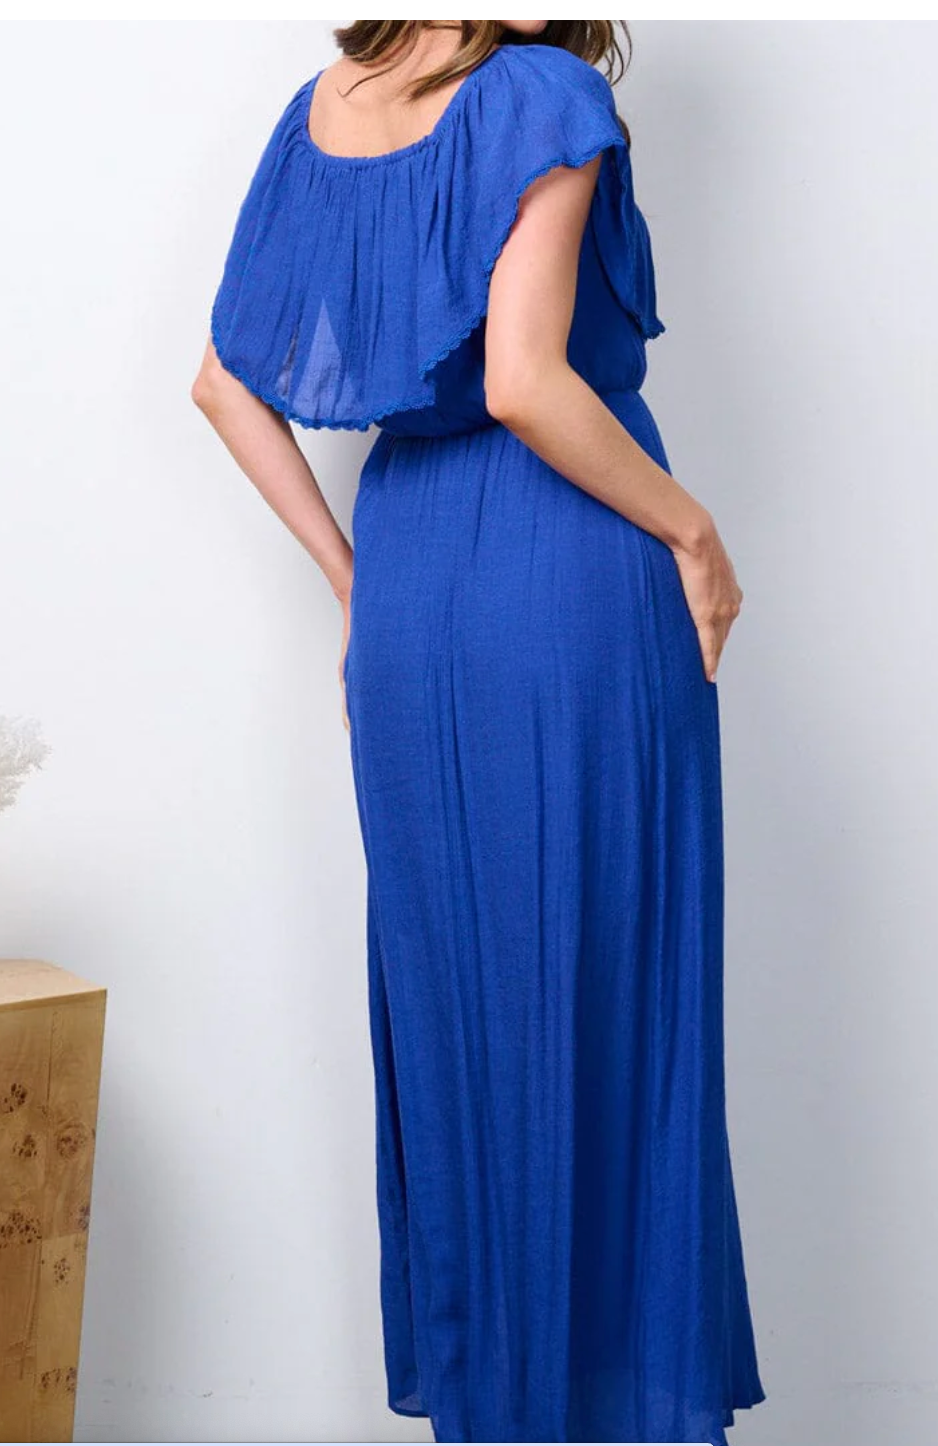 Effortless Glamour: Women's Short Sleeve Ruffle Front Slit Maxi Dress